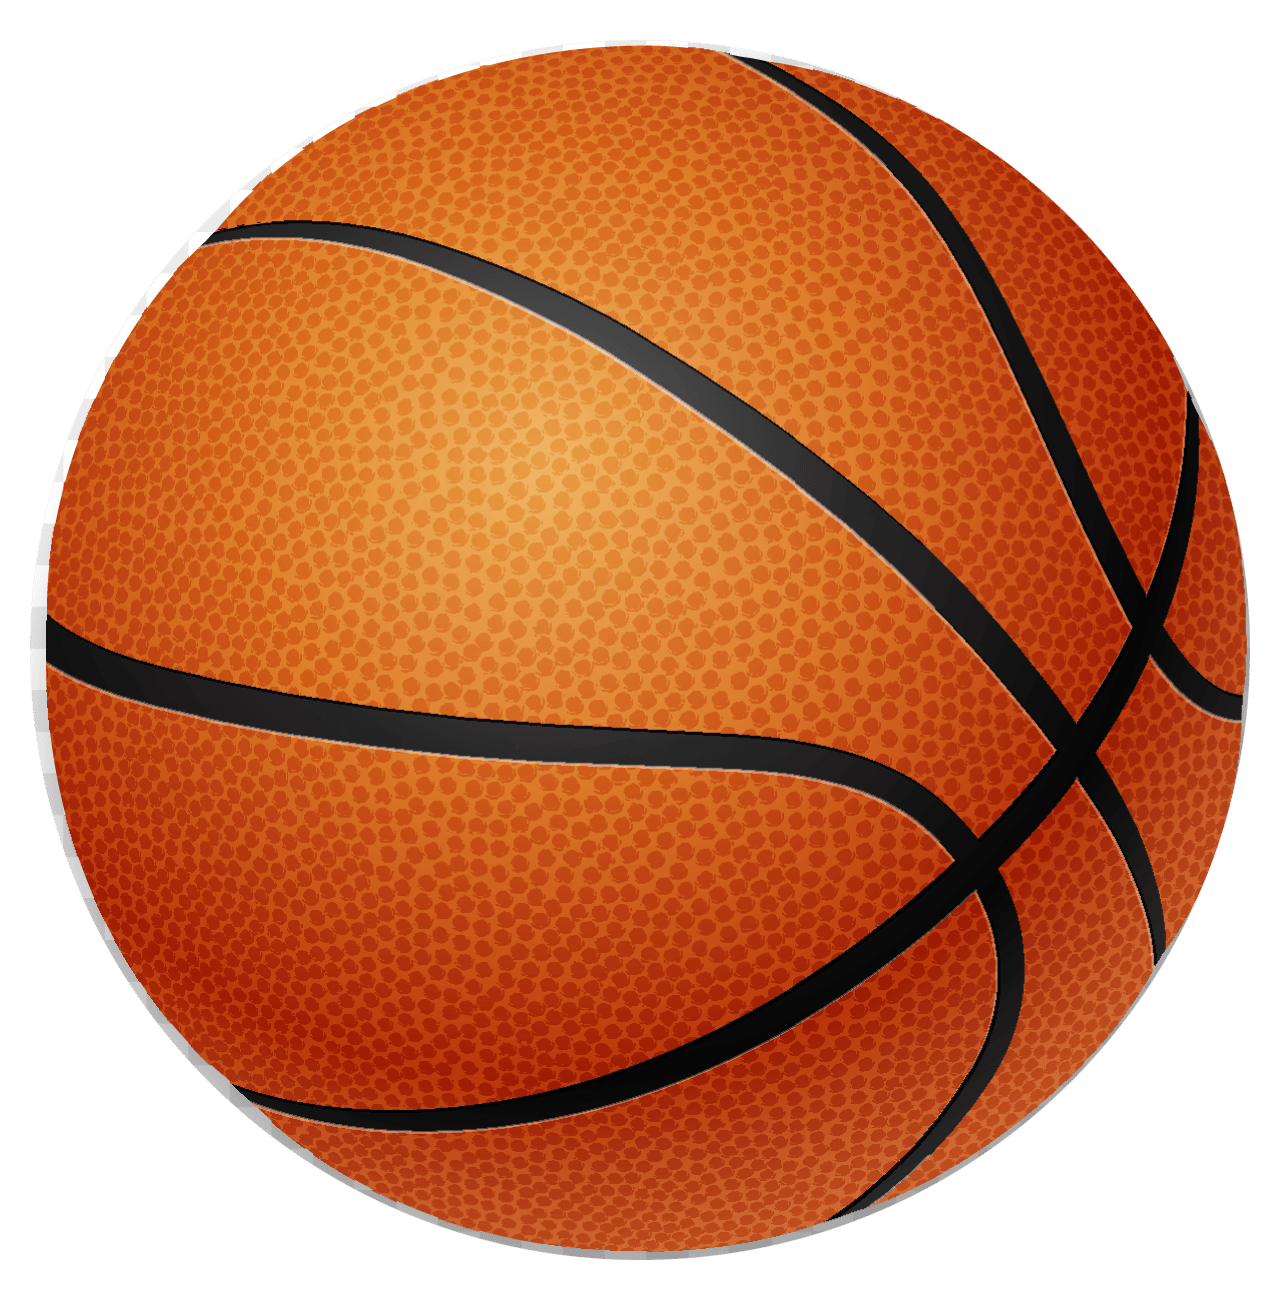 Sports equipment, Ball game, Basketball, Football, Orange